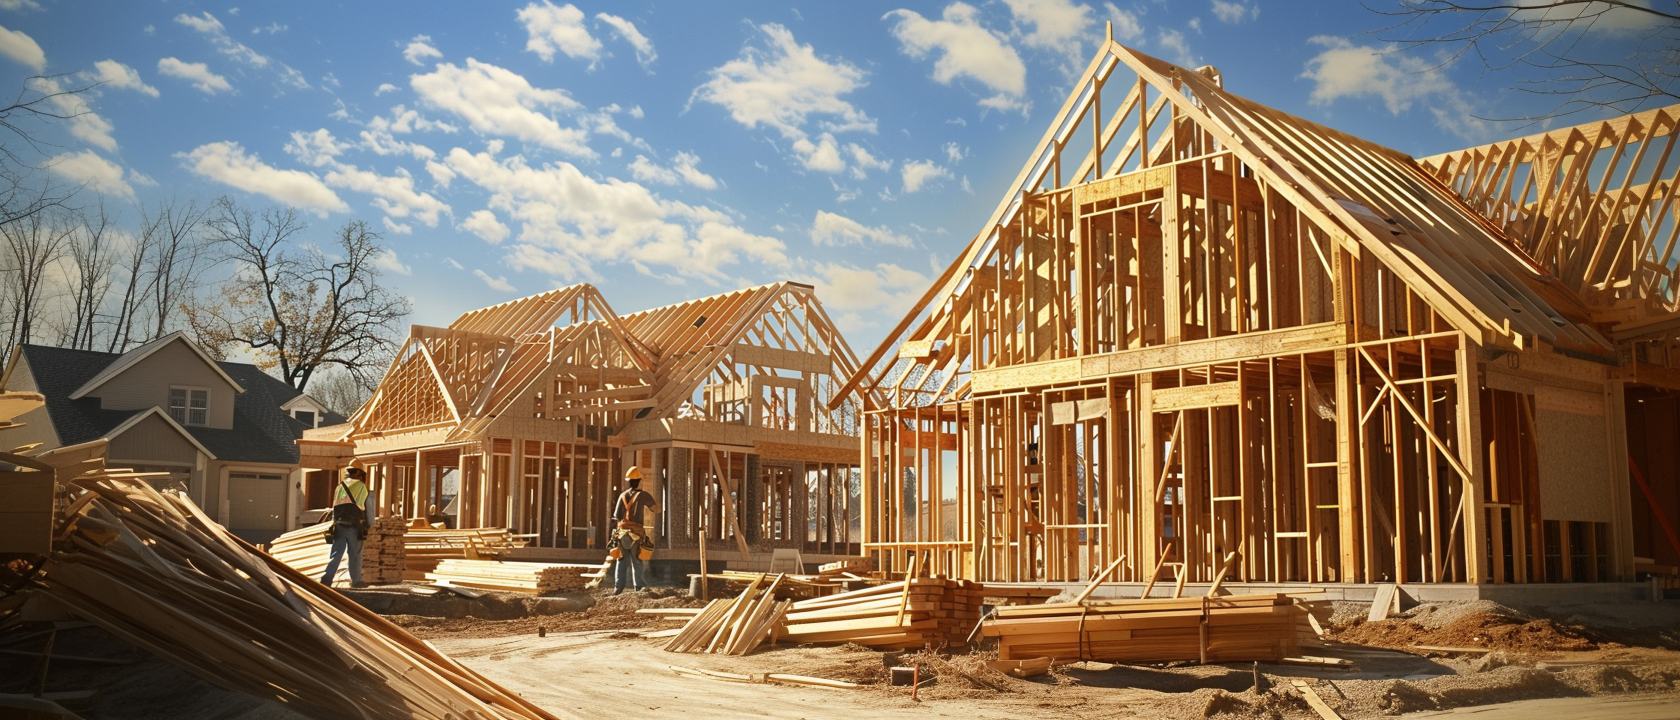 NY Fed Survey Reveals Bleak Outlook for Homeownership